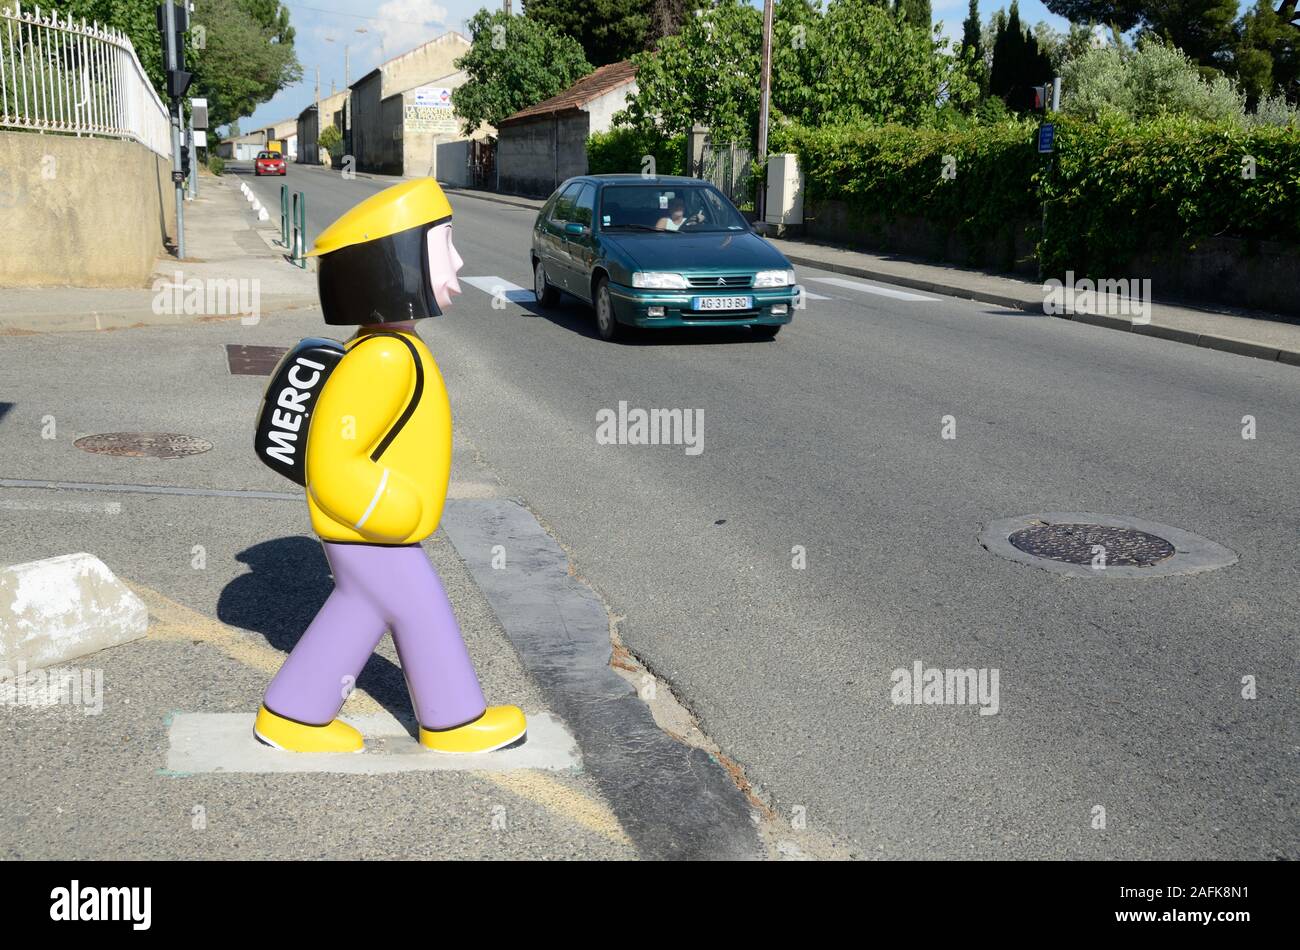 Pedestrian Crossing, Crosswalk, or Zebra Crossing using Models of Schoolchildren as Warning to Motorists Provence France Stock Photo